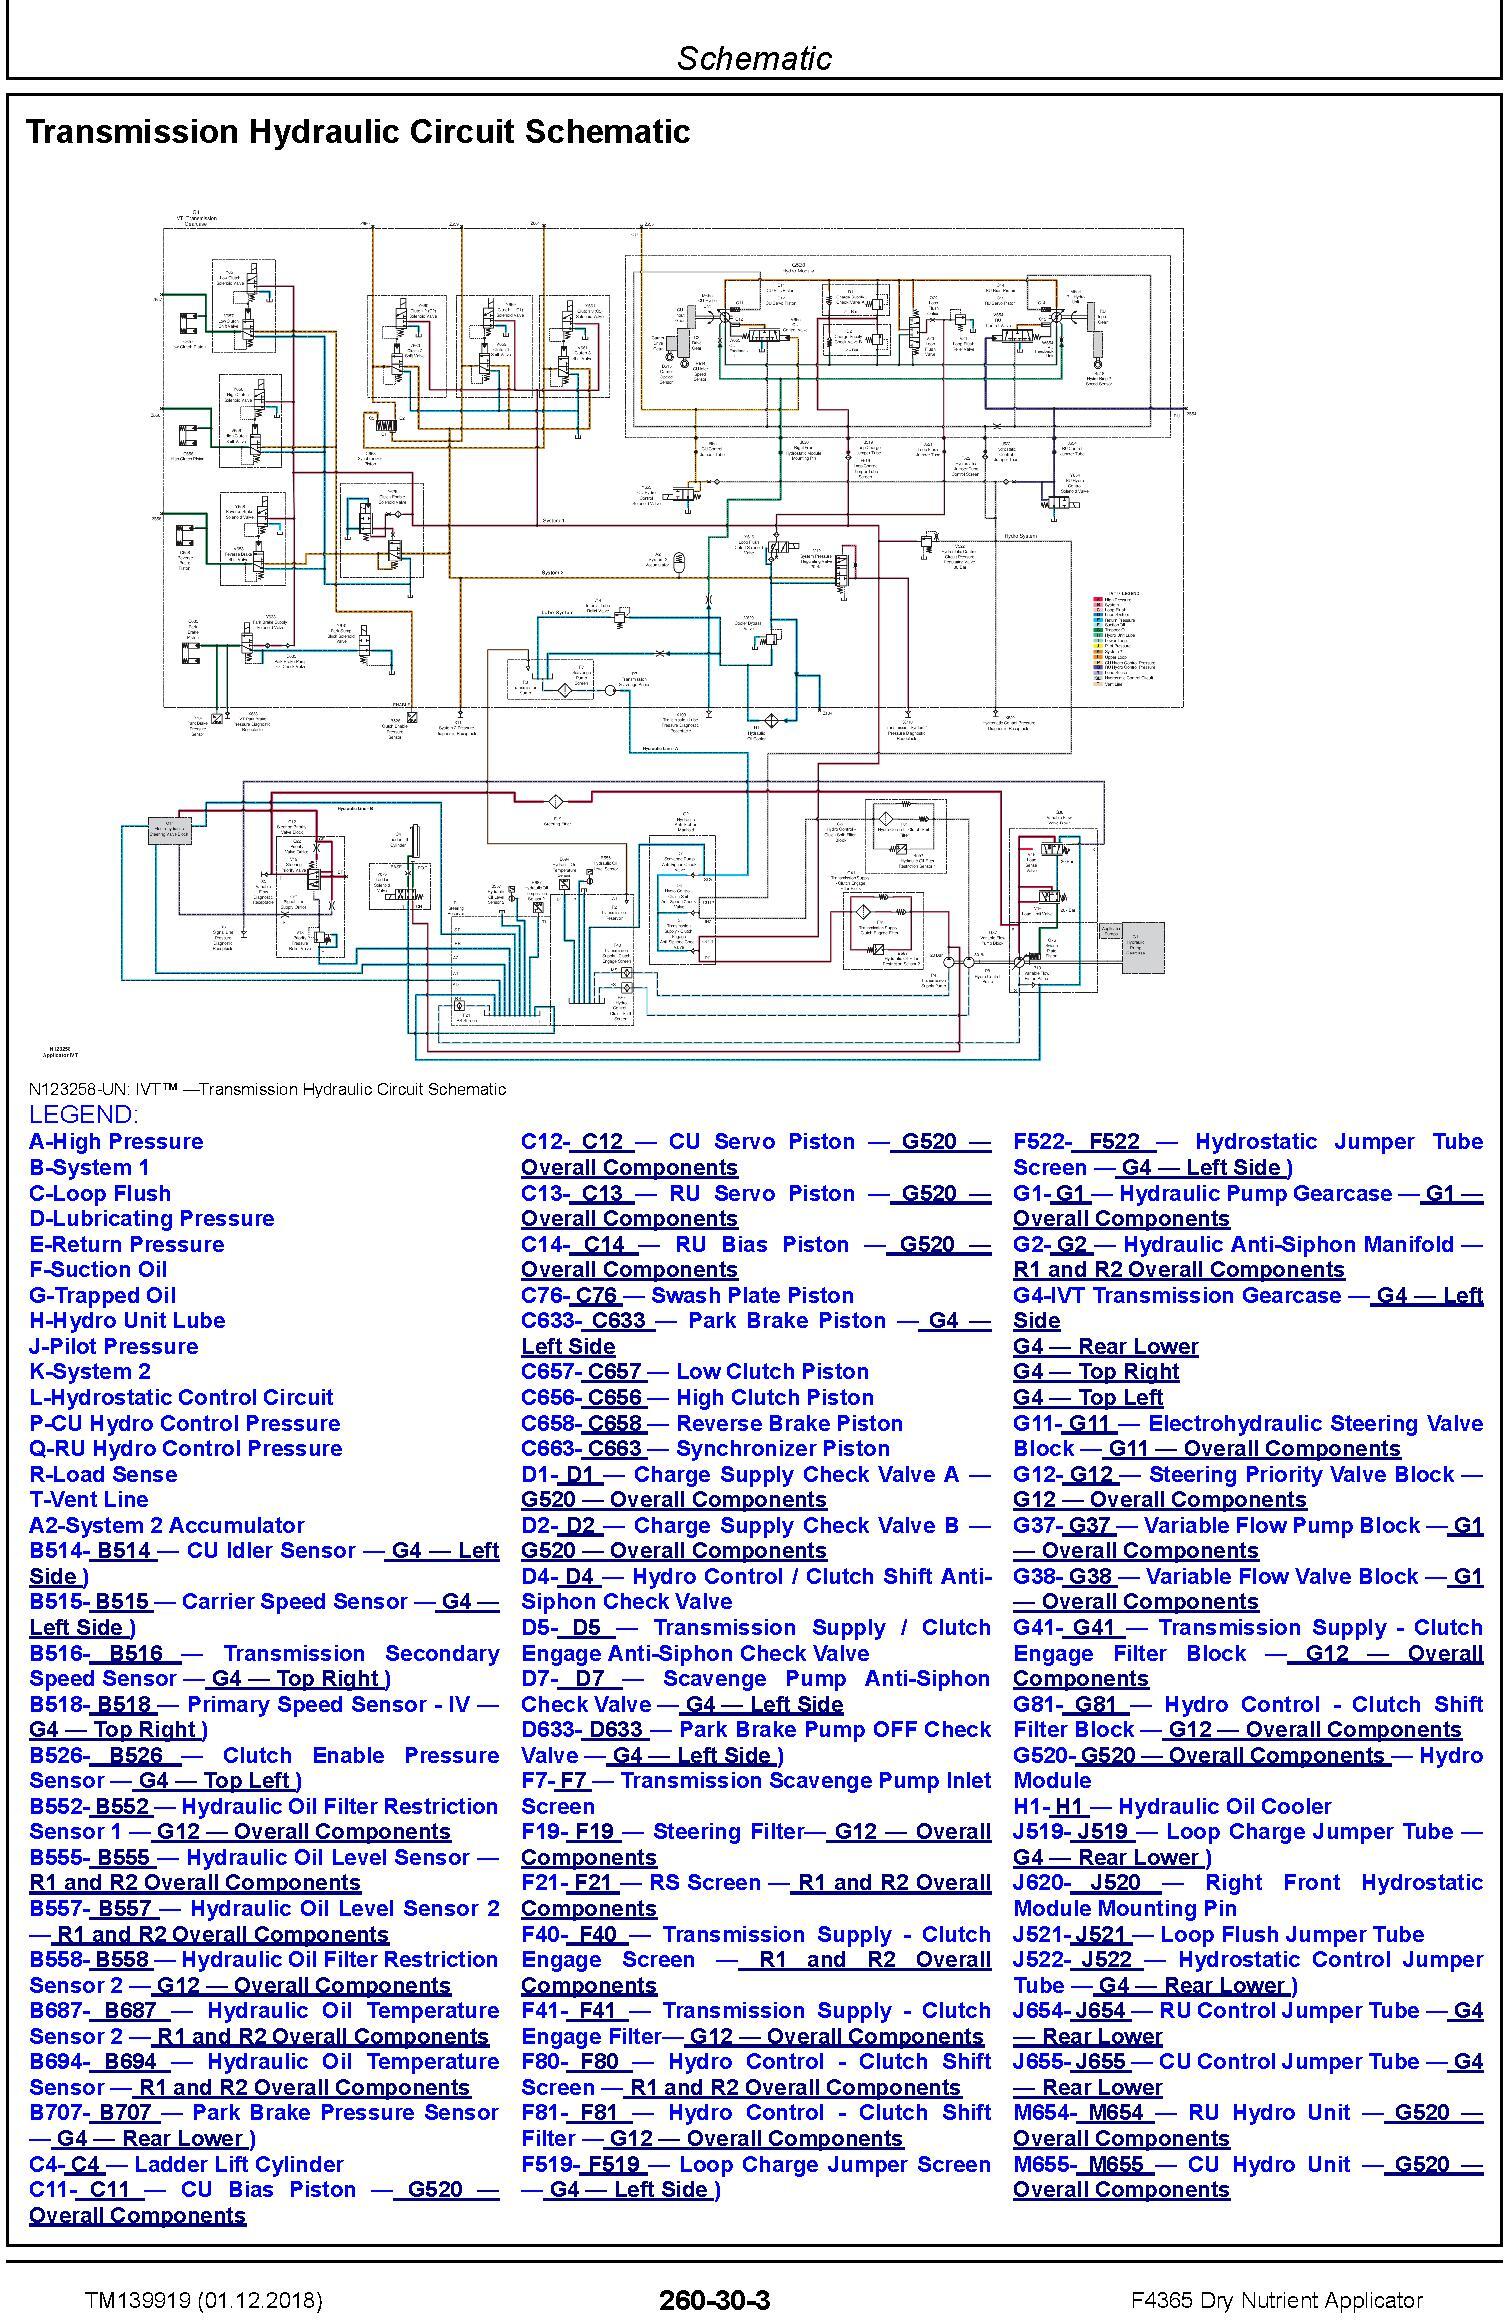 John Deere F4365 Dry Nutrient Applicator Diagnostic Technical Service Manual (TM139919) - 1